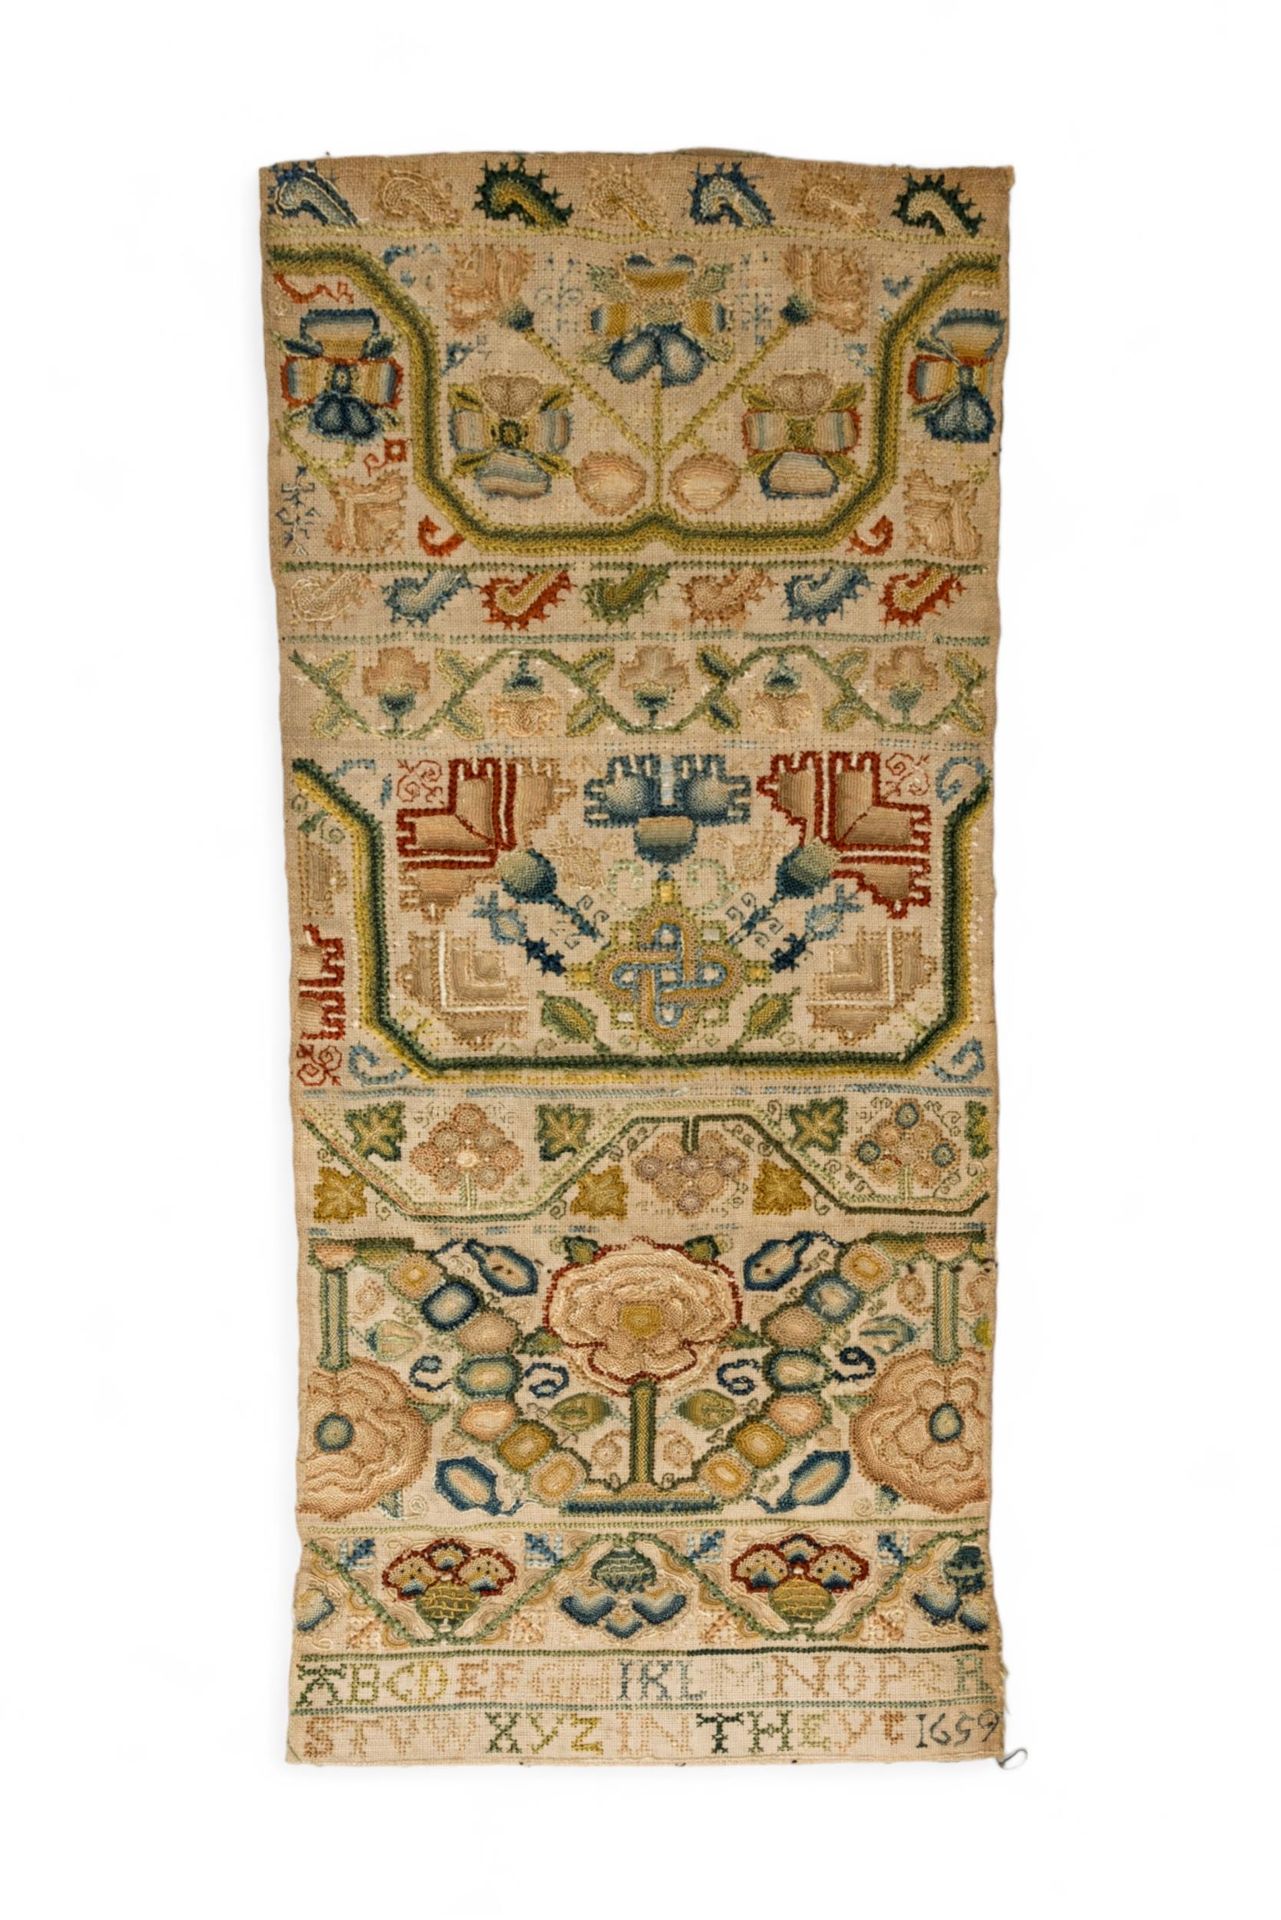 Null 一件 17 世纪带状取样器，制作精细，有花朵面板和蜿蜒的花朵图案带，底部有字母和 "I N Theyt 1659 "字样。41 x 18 厘米